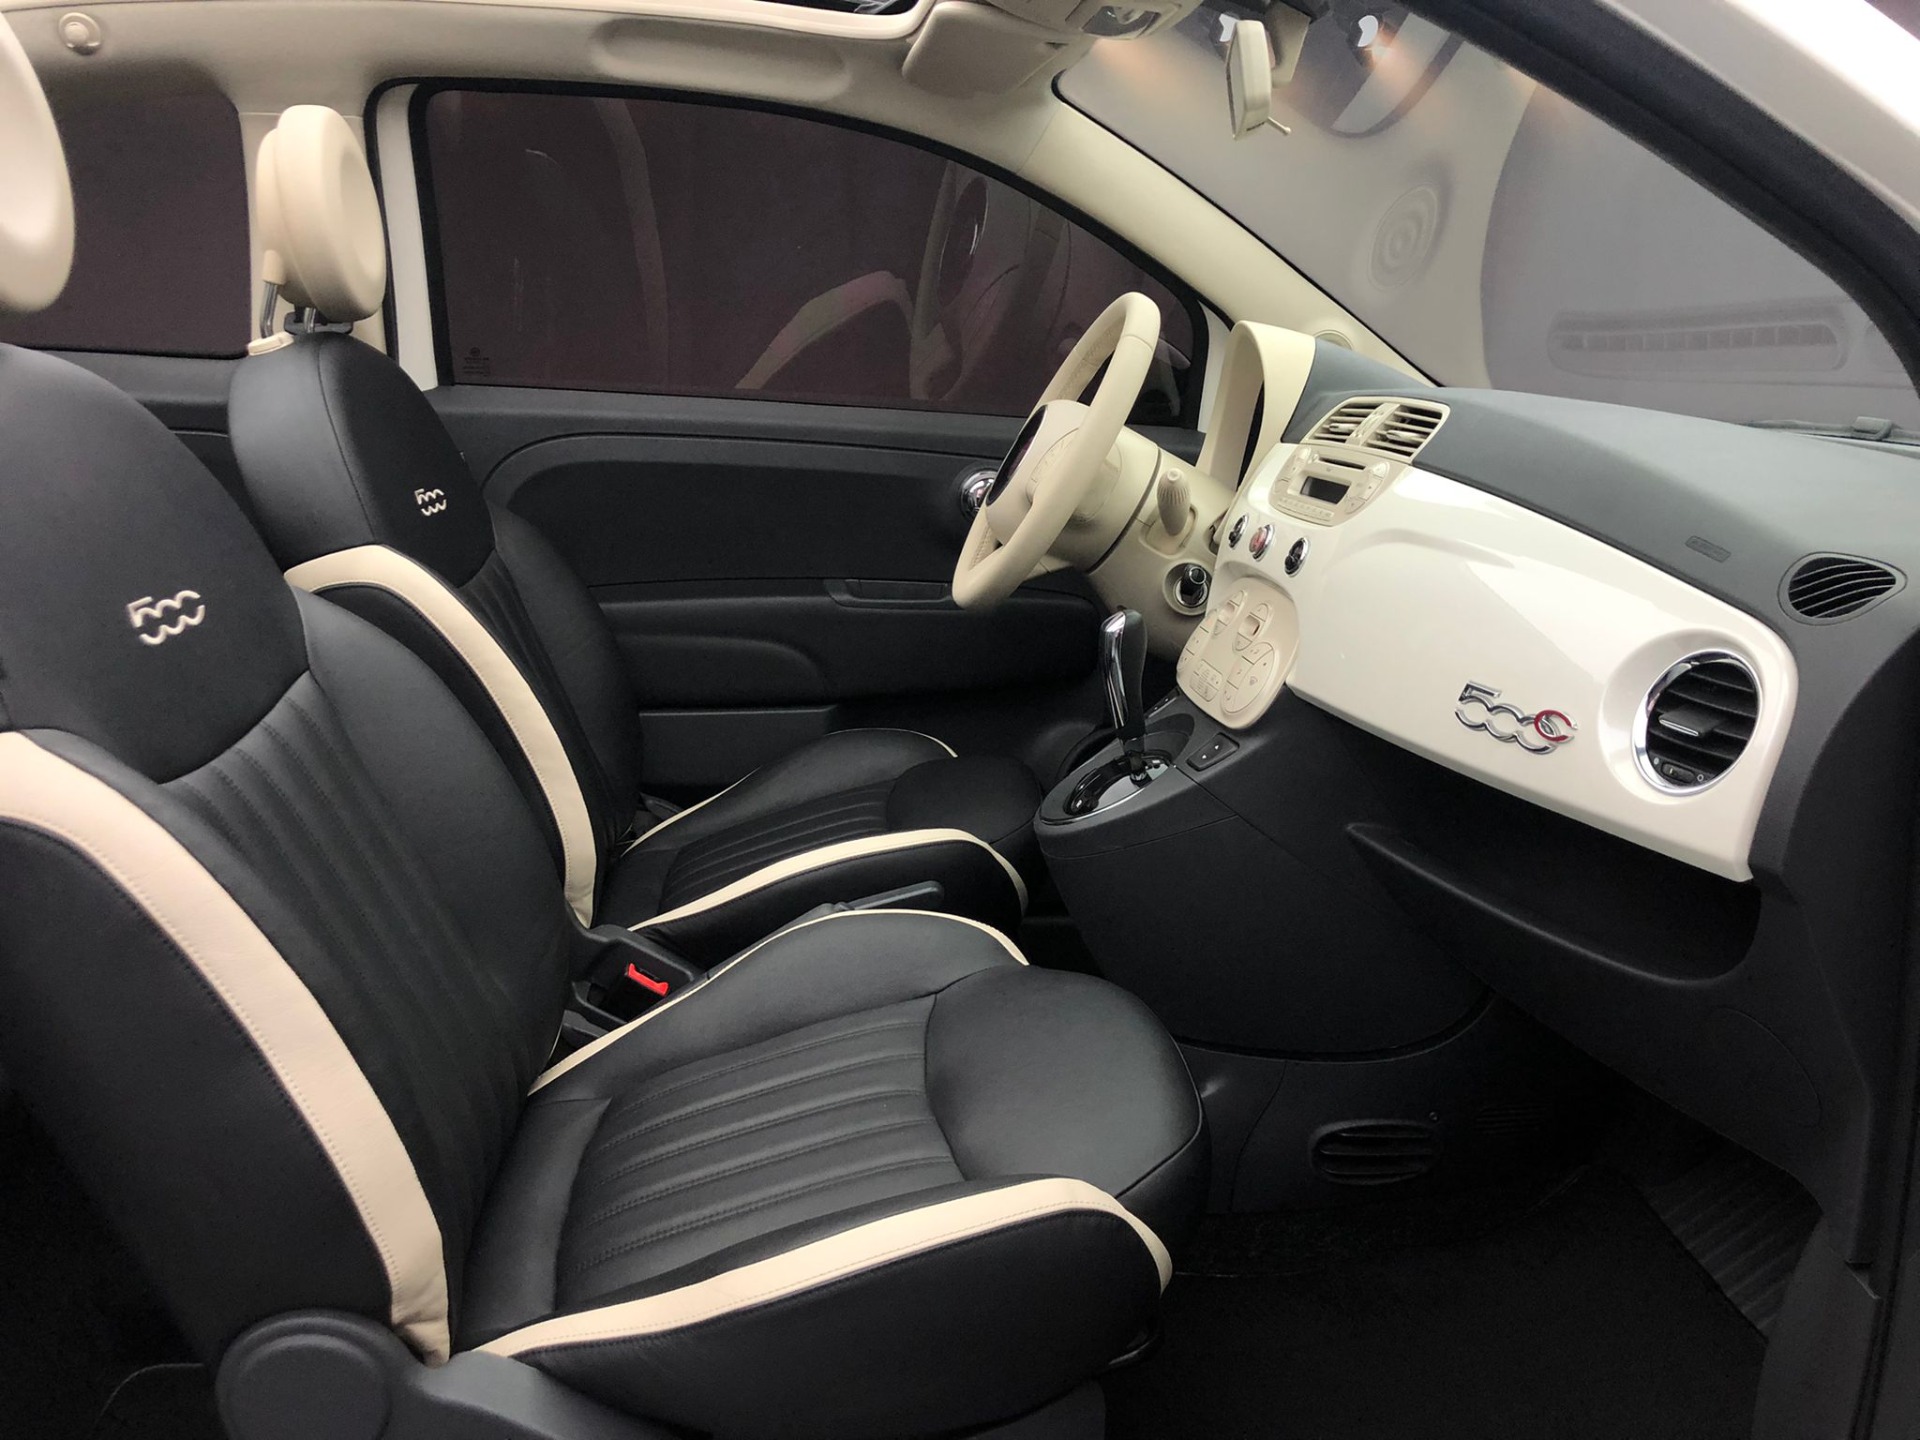 2015 51Bin Km'de Otomatik Cabrio Fıat 500 Cult-11